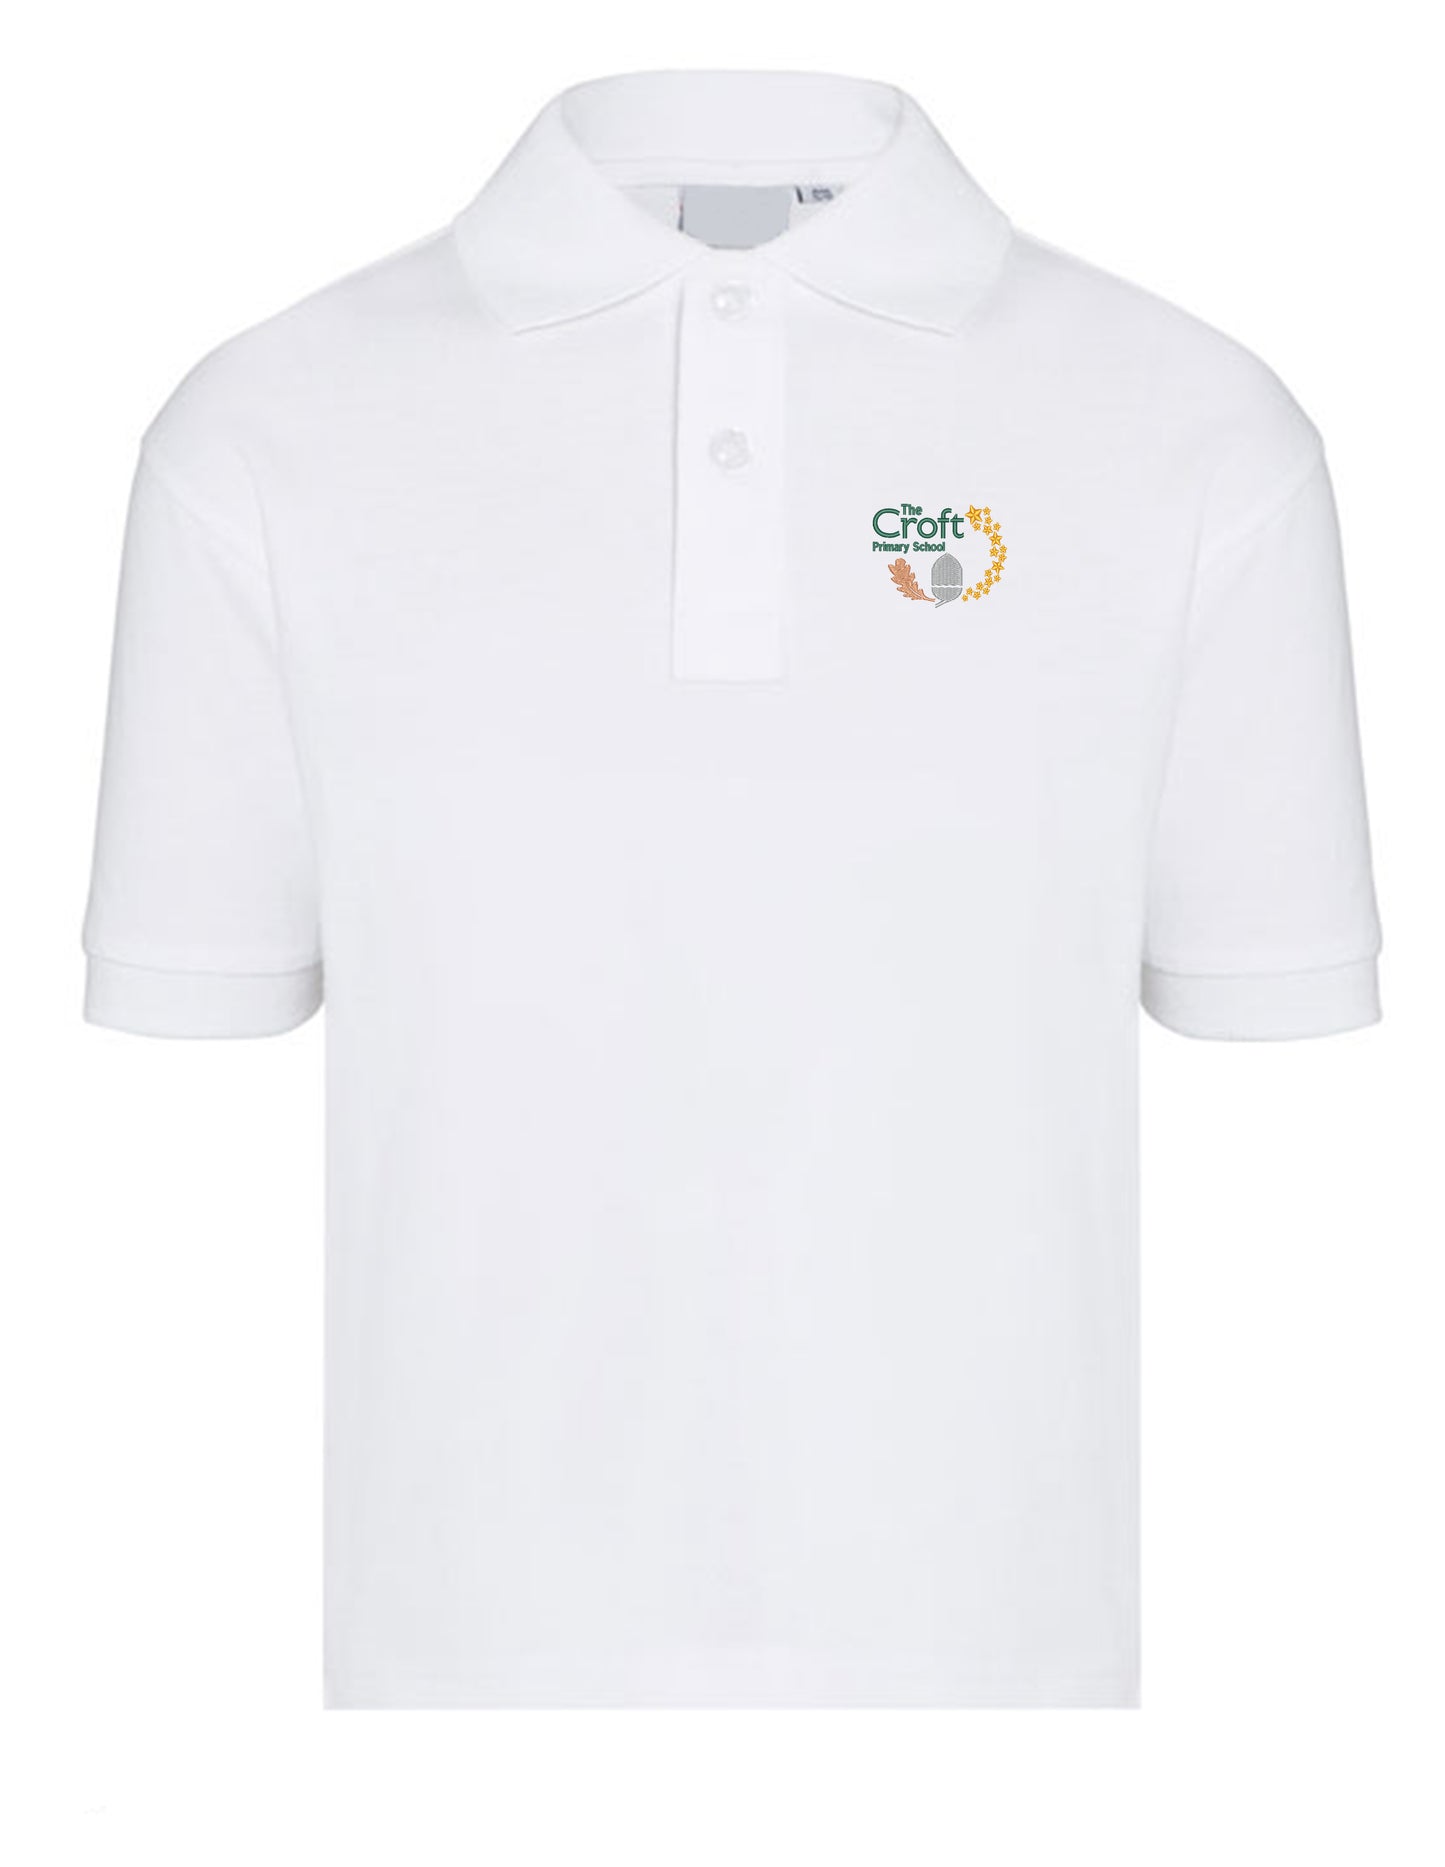 The Croft Primary School - White Polo Shirt